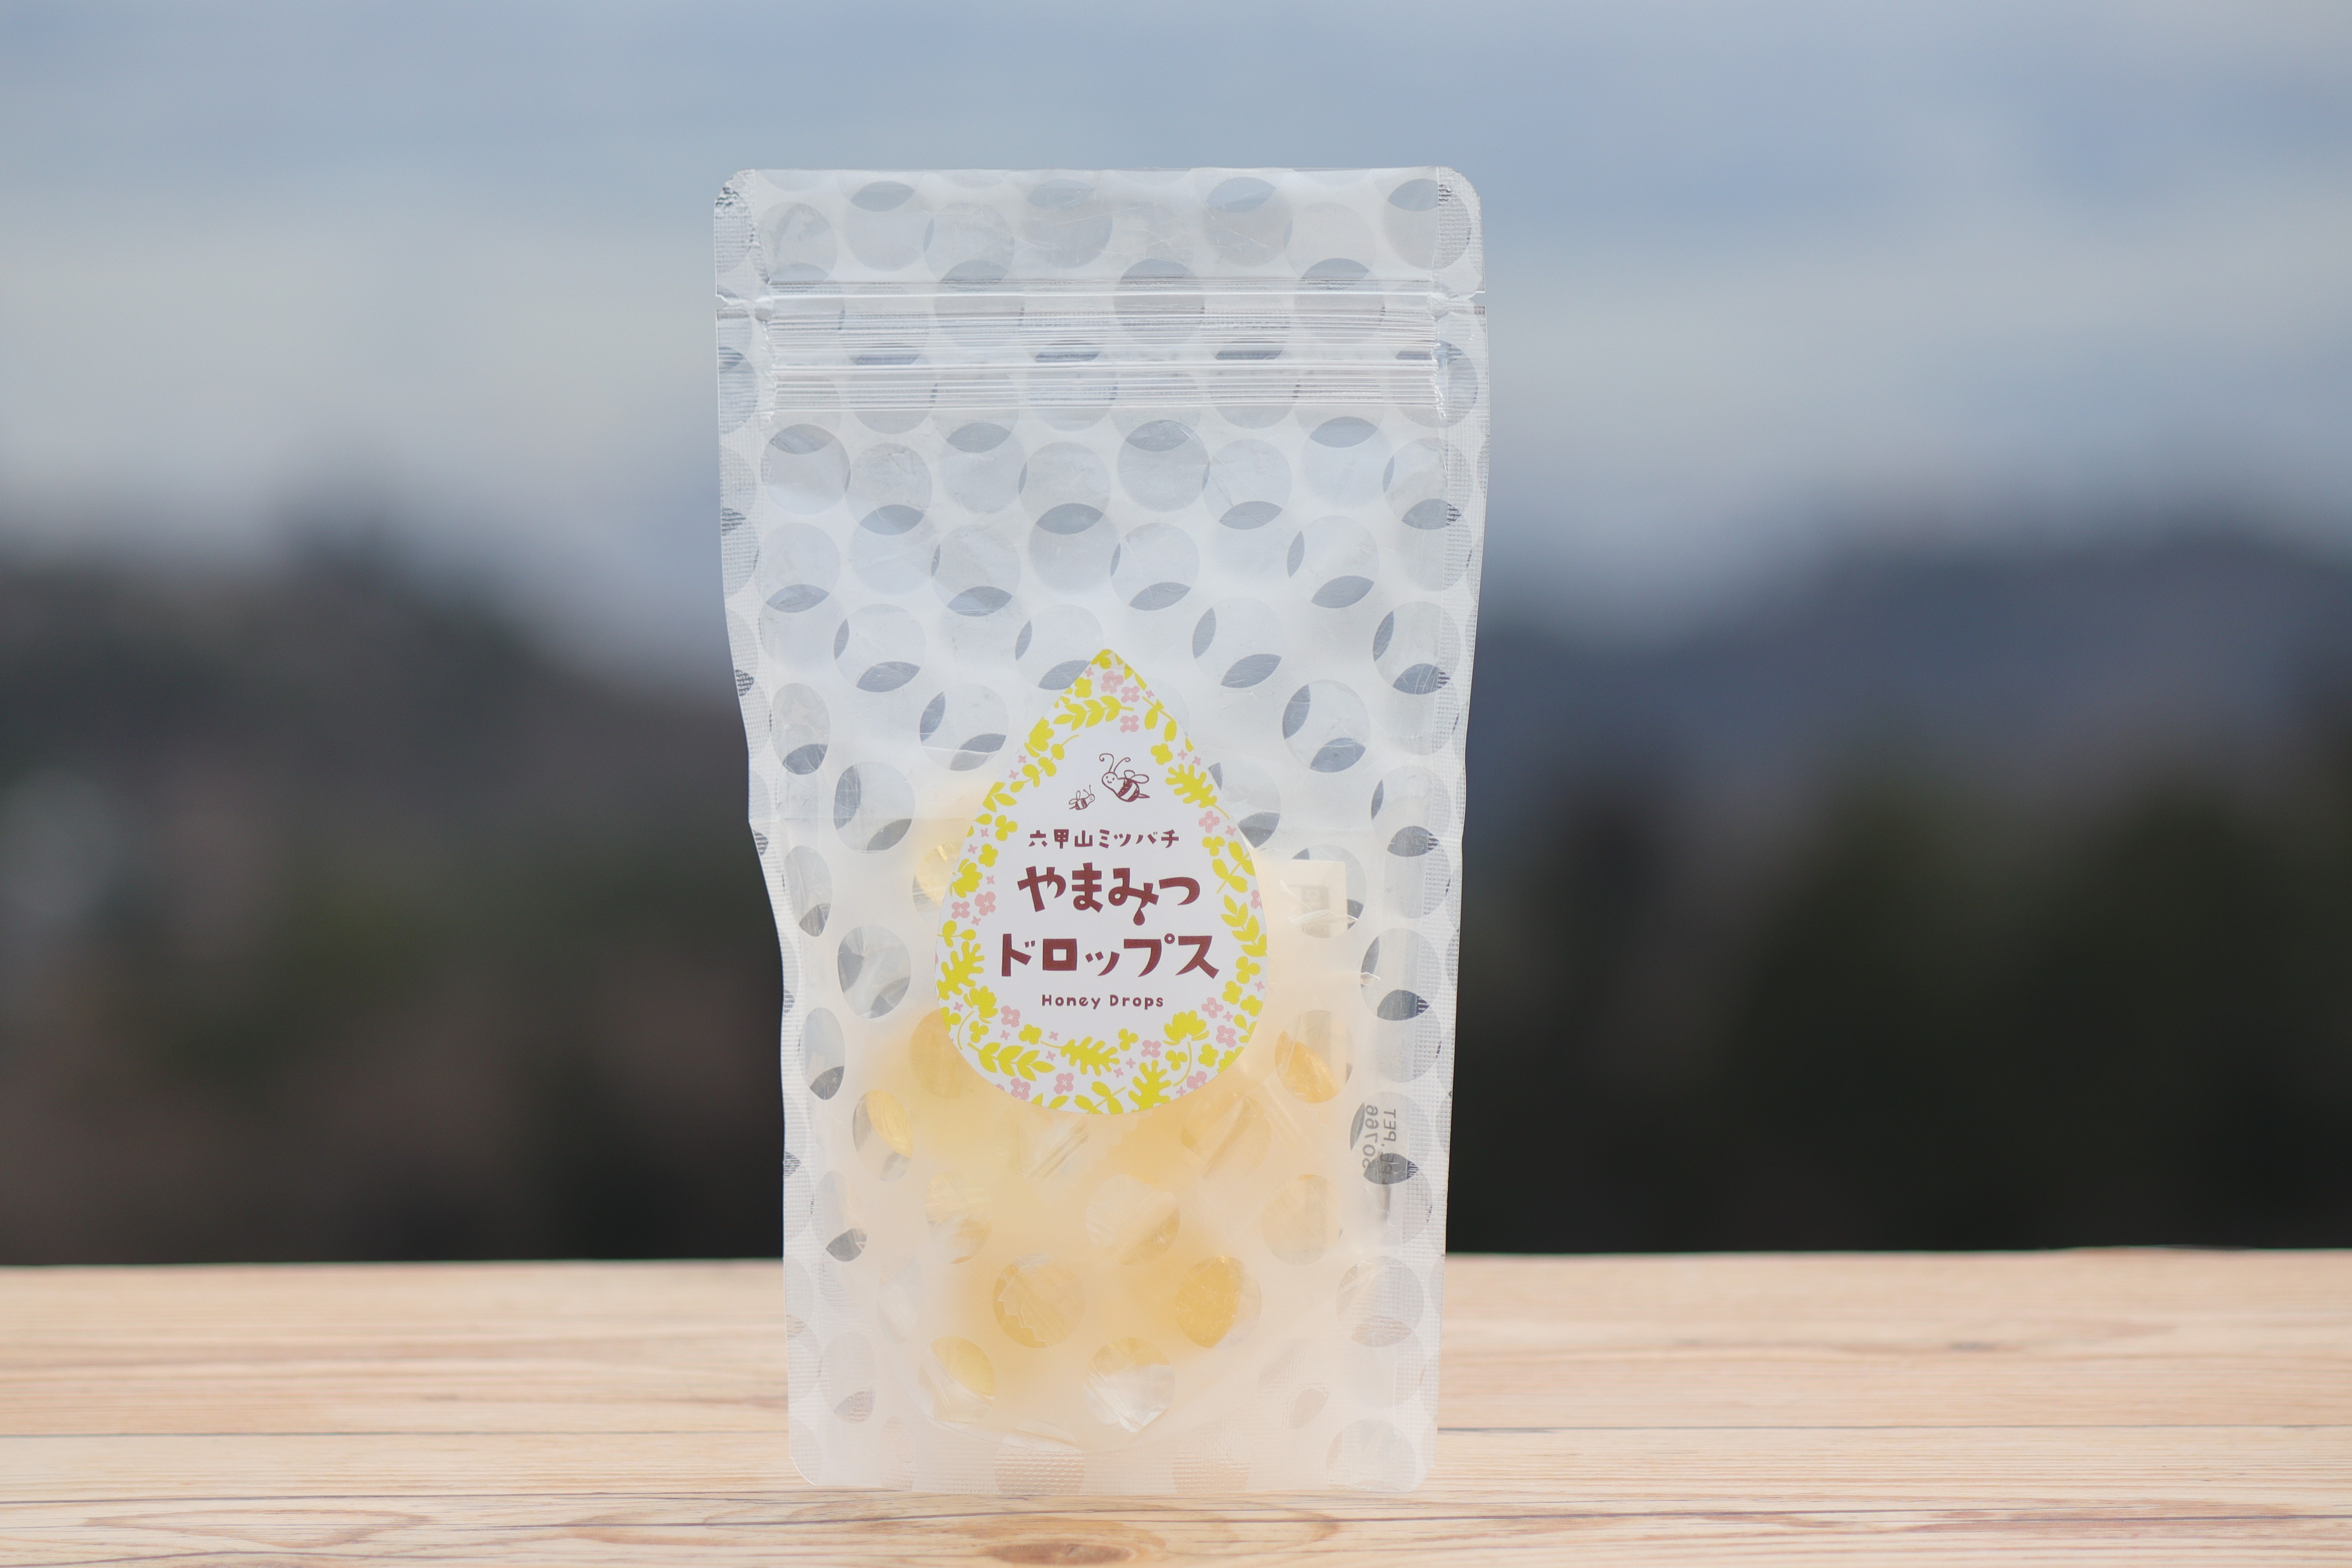 &lt;New product&gt; Yamamitsu Drops